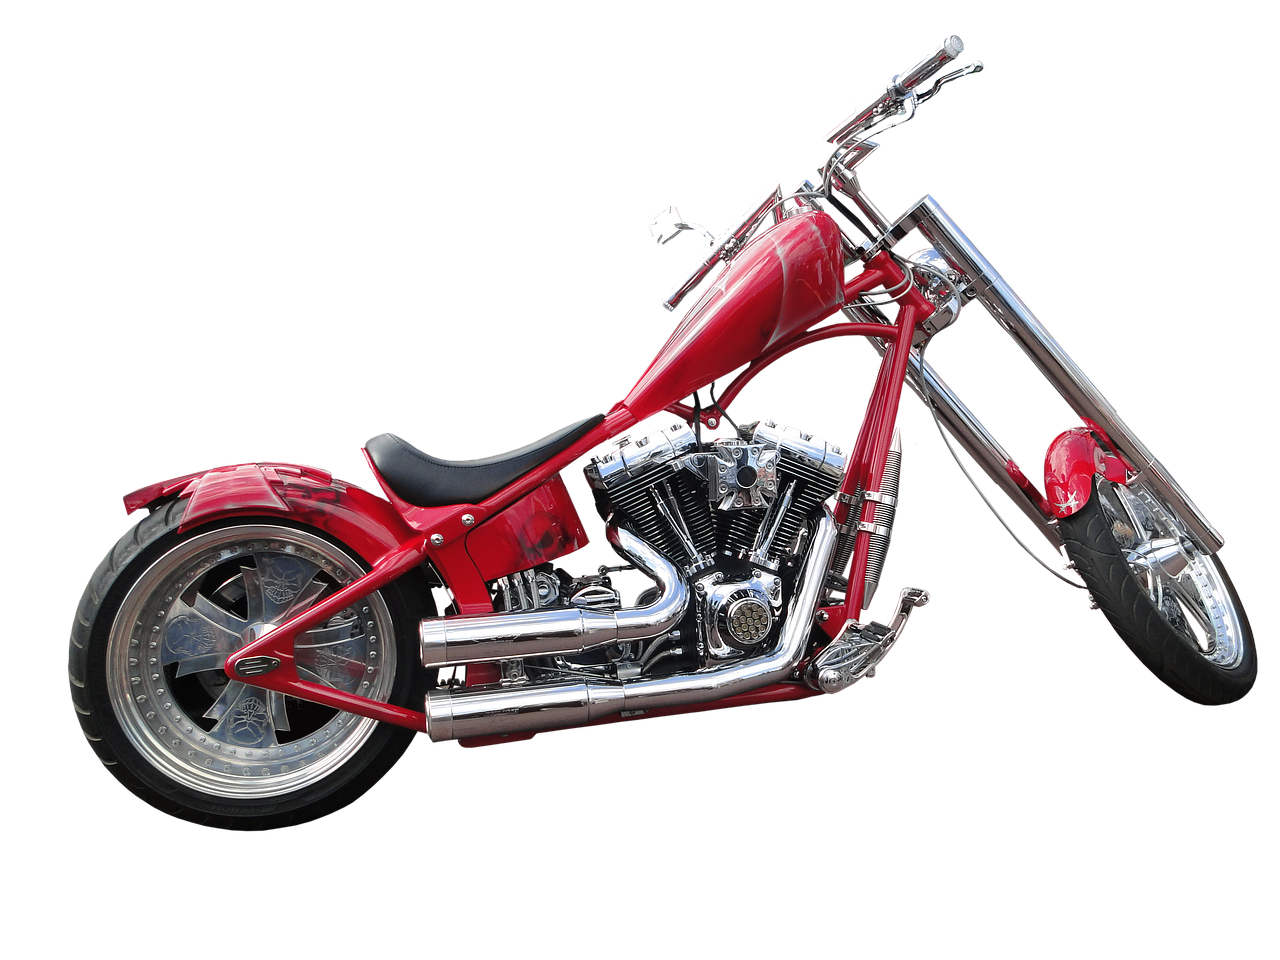 Harley-Davidson India PNG Free File Download